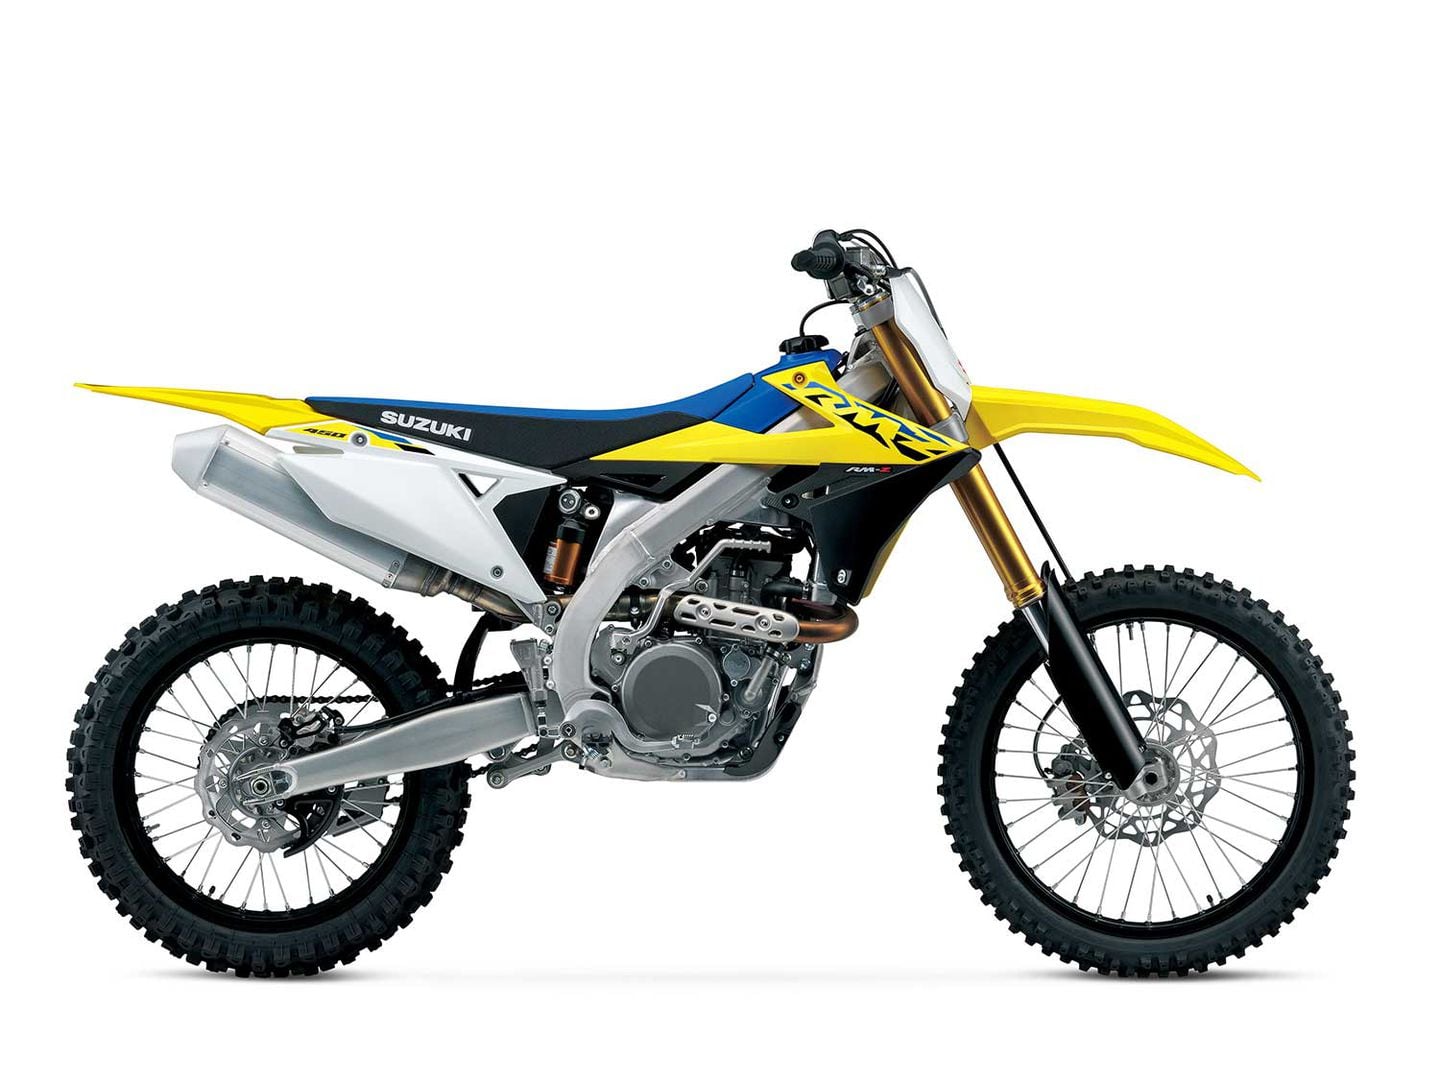 2021 Suzuki Motocross, Off-Road, And Dual Sport Bikes Unveiled | Dirt Rider